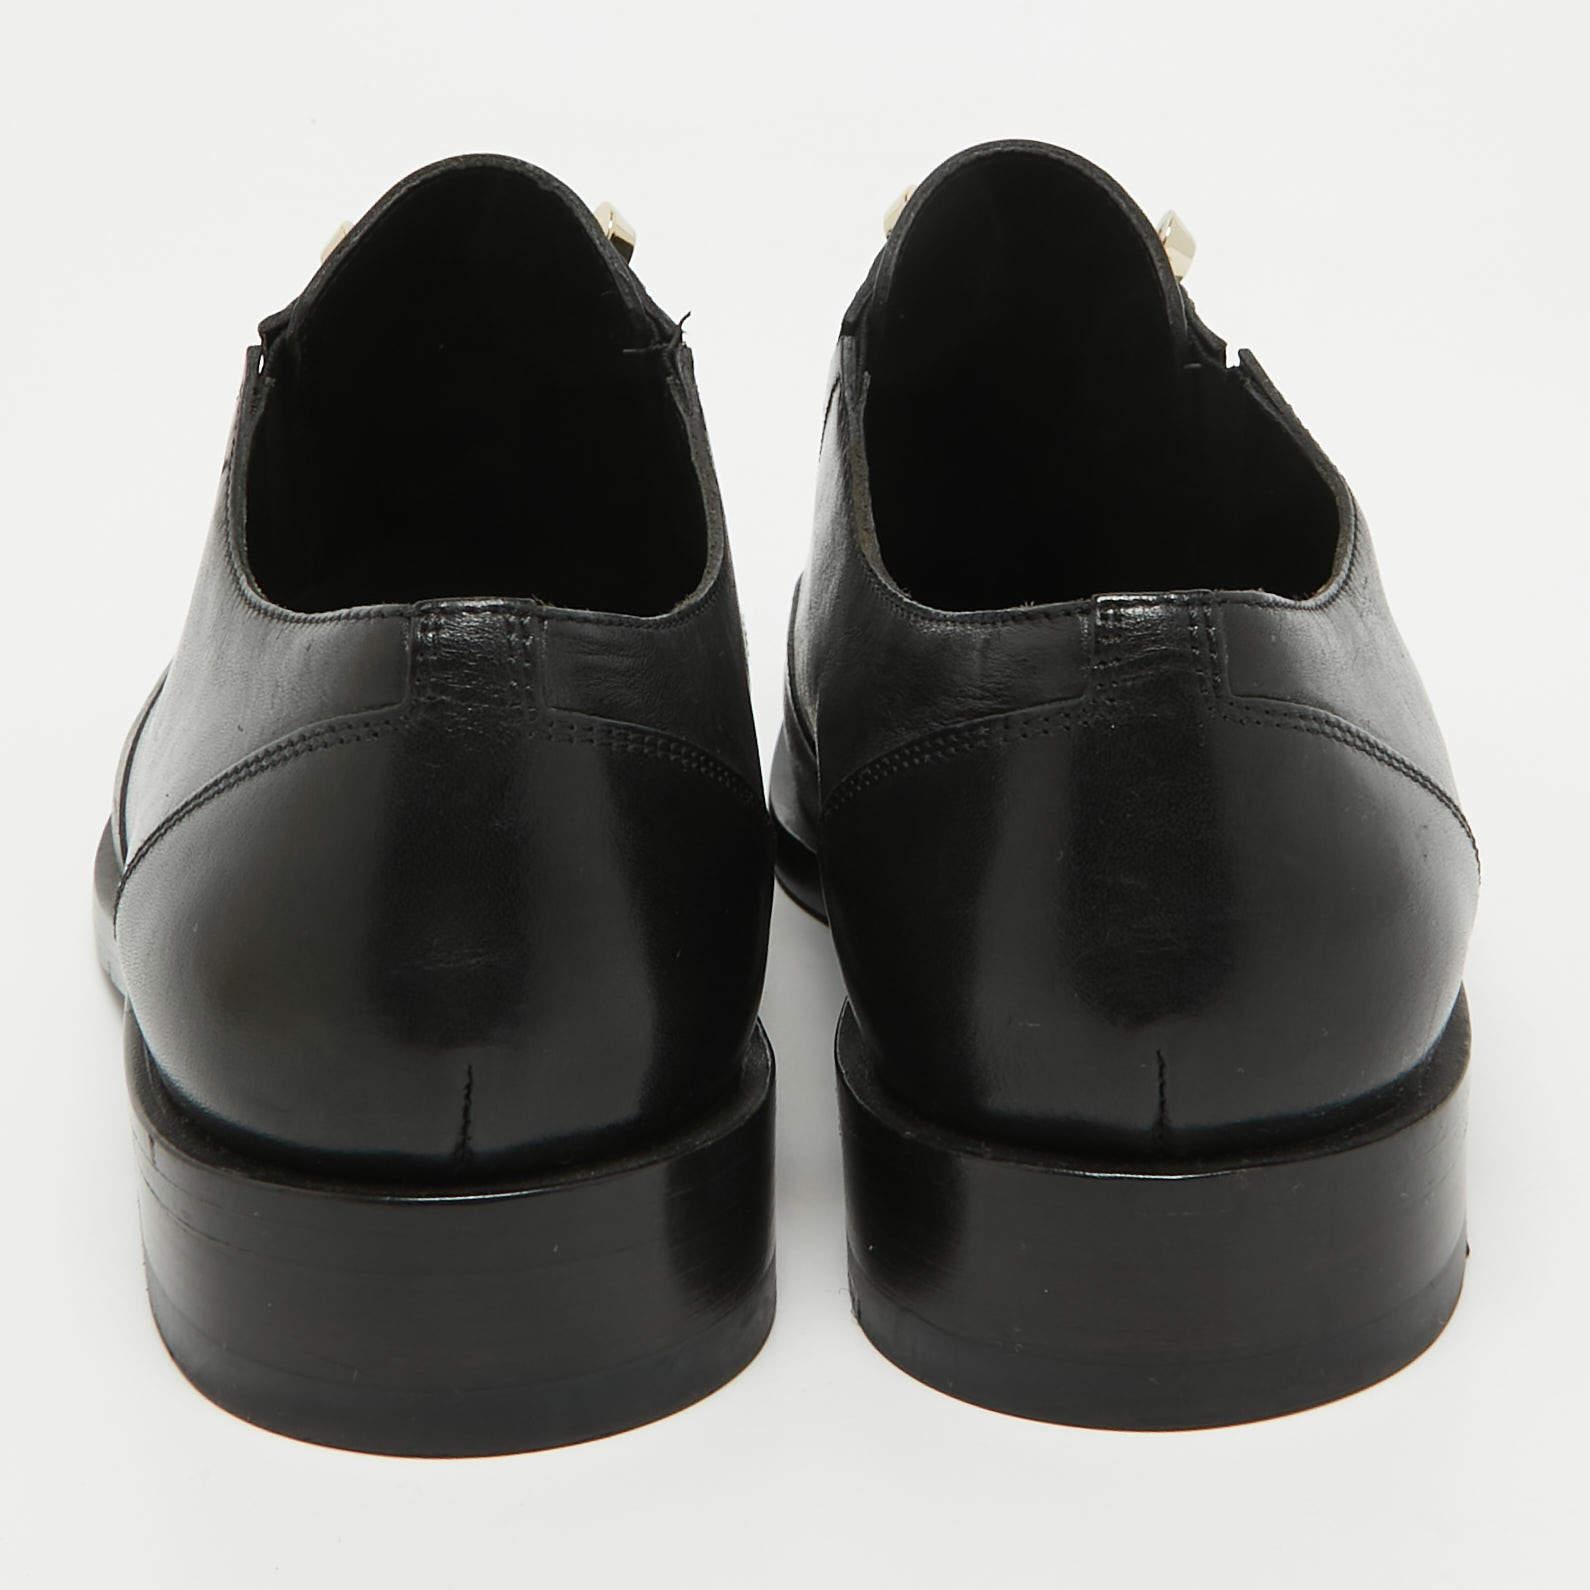 Balenciaga Black Leather Slip On Oxfords Size 39.5 For Sale 1